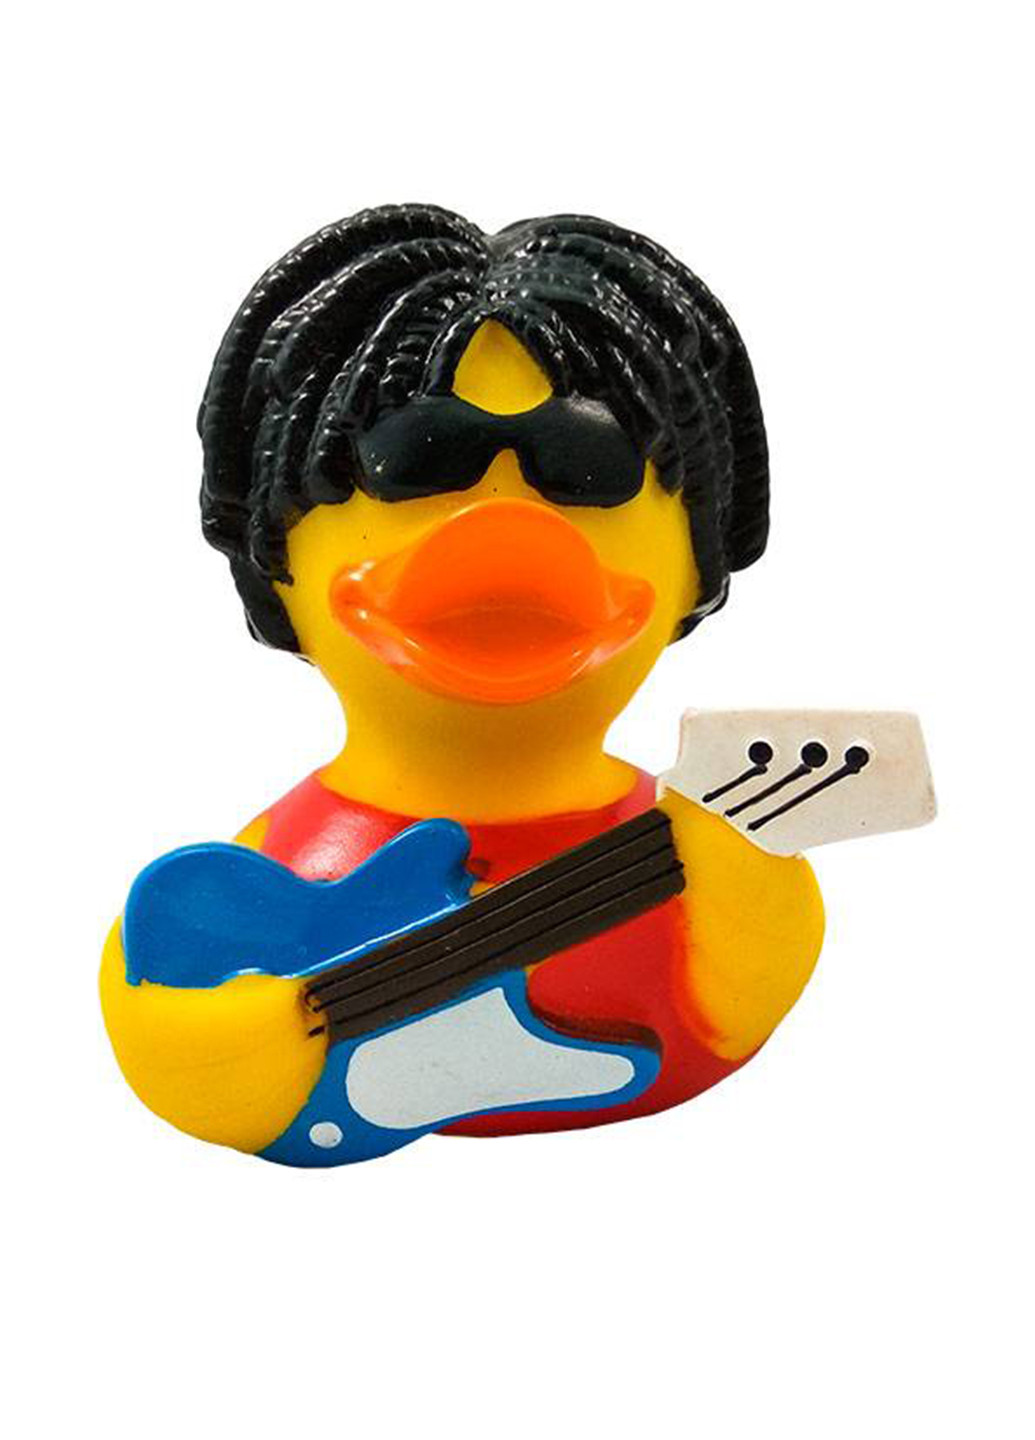 Игрушка для купания Утка Рокер, 8,5x8,5x7,5 см Funny Ducks (250618838)